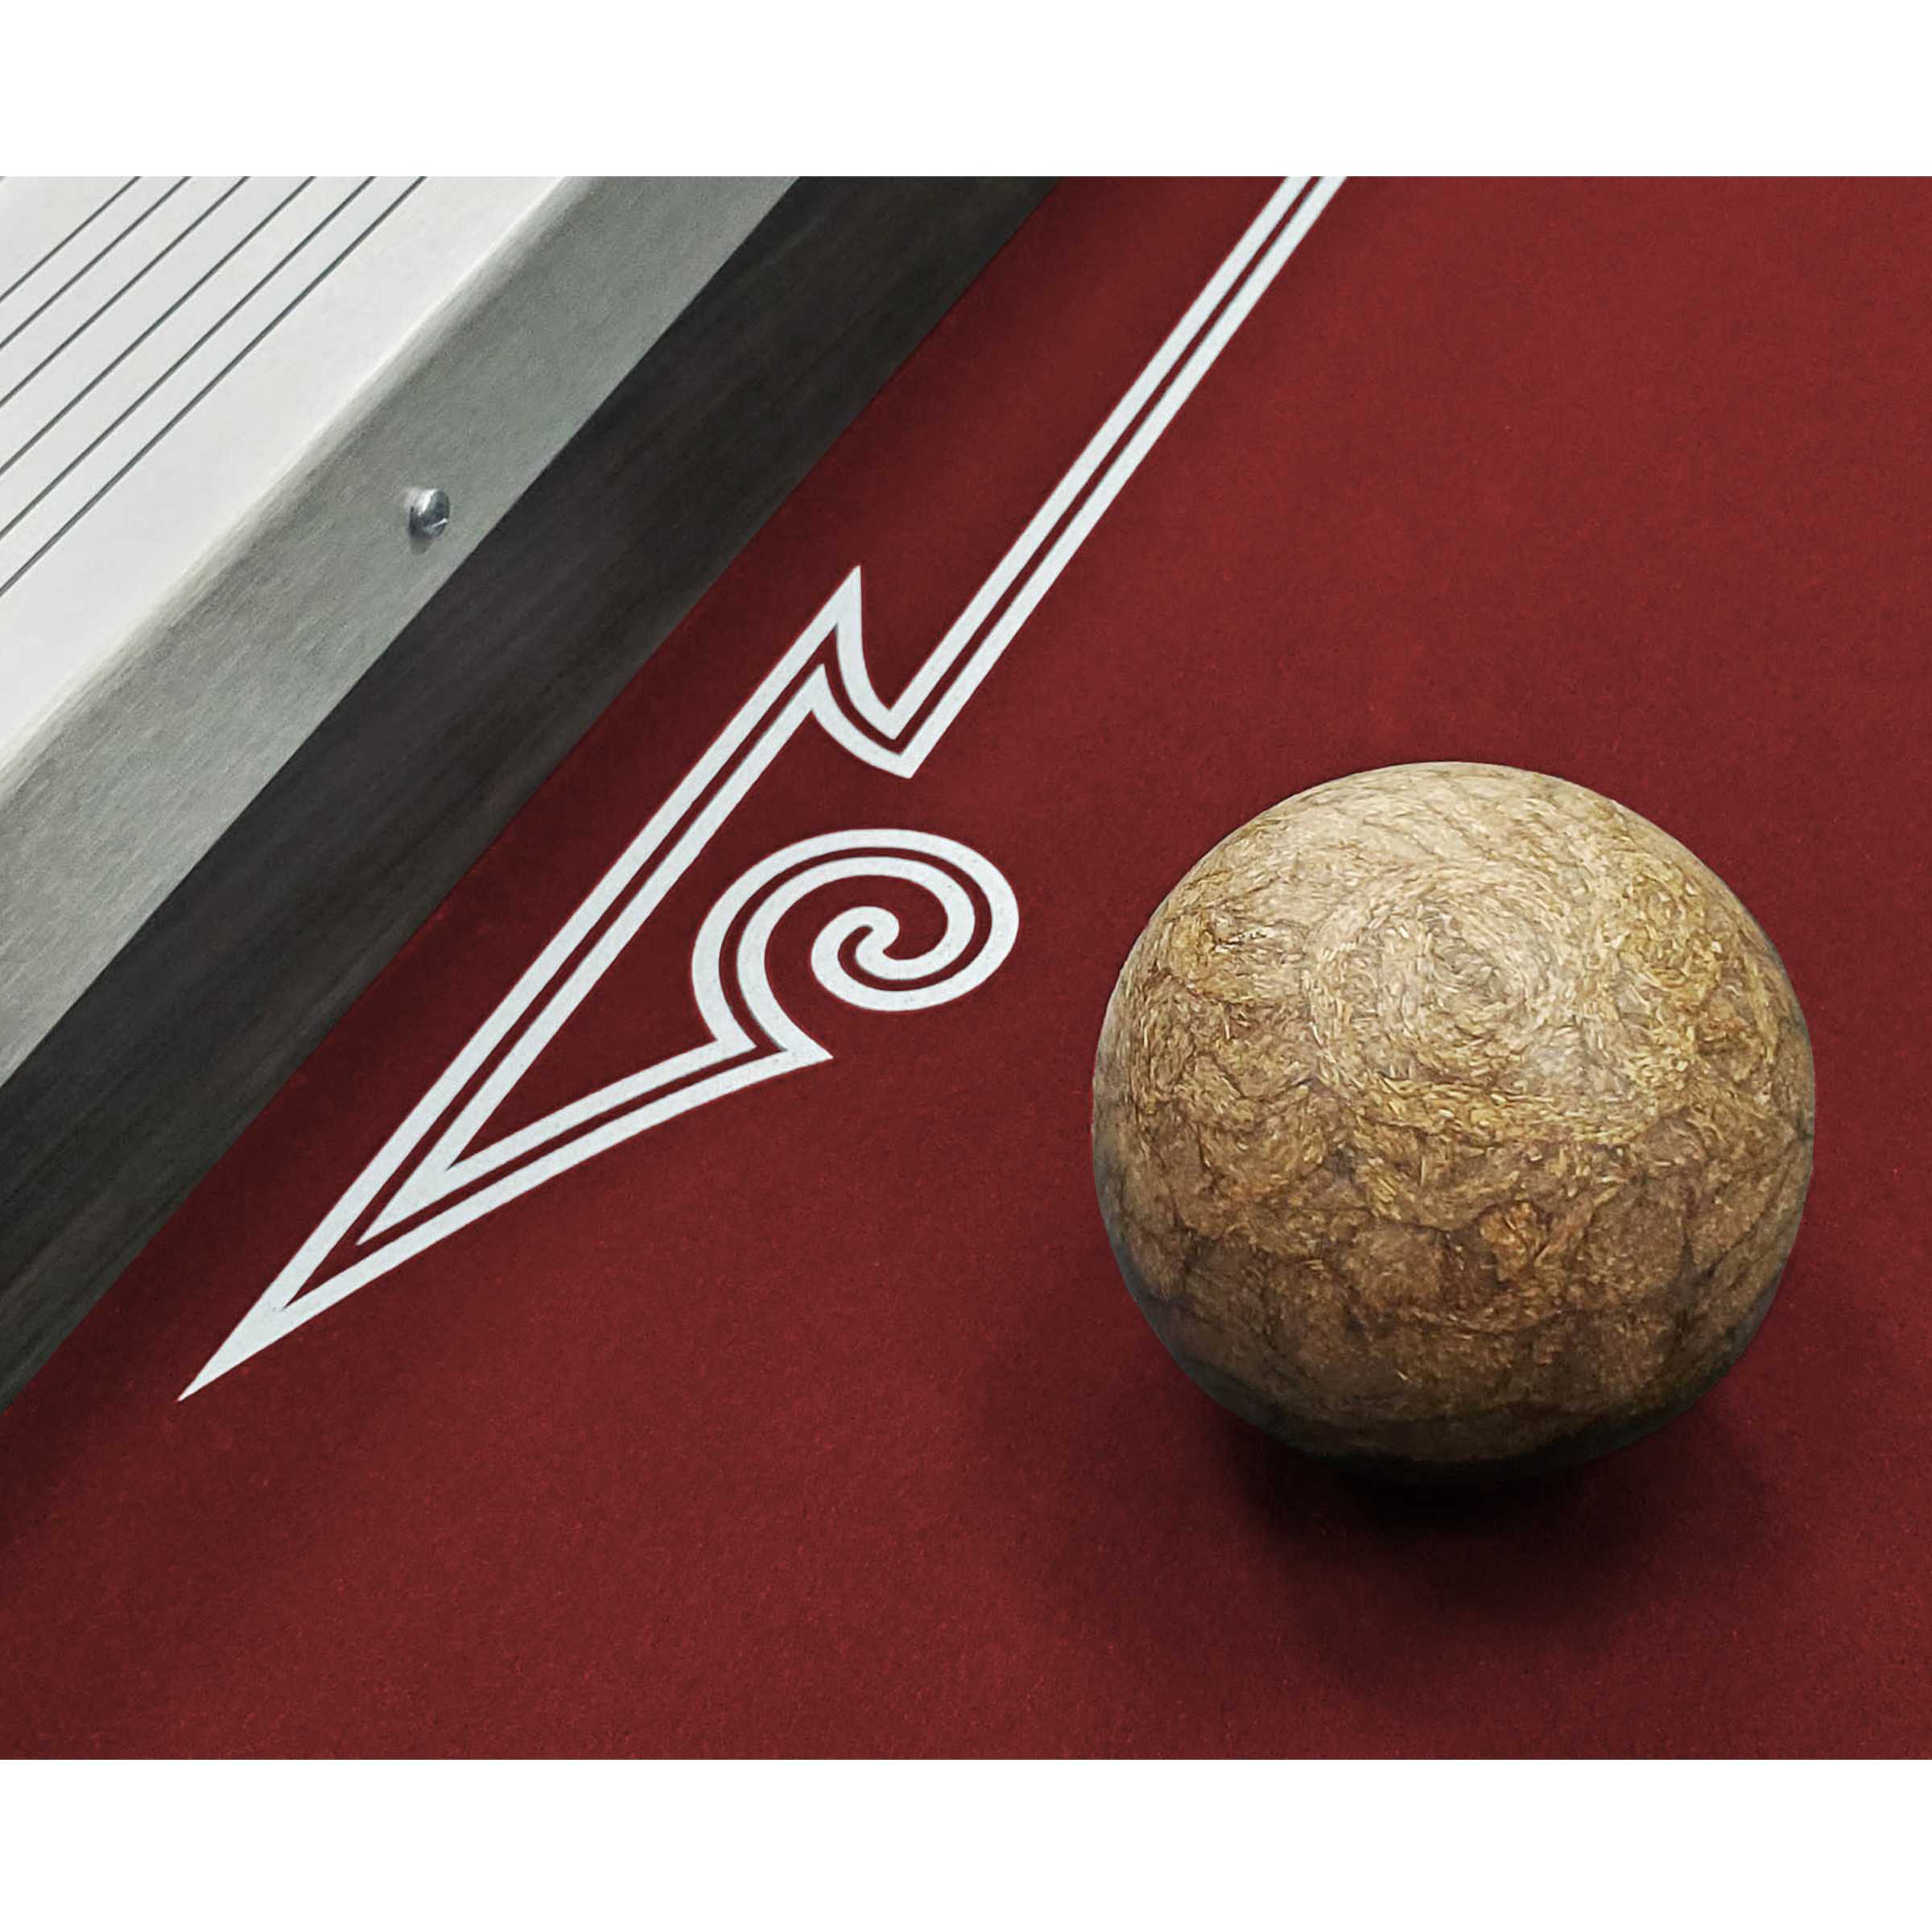 HOME ARCADE PREMIUM SKEE-BALL WITH SCARLET CORK